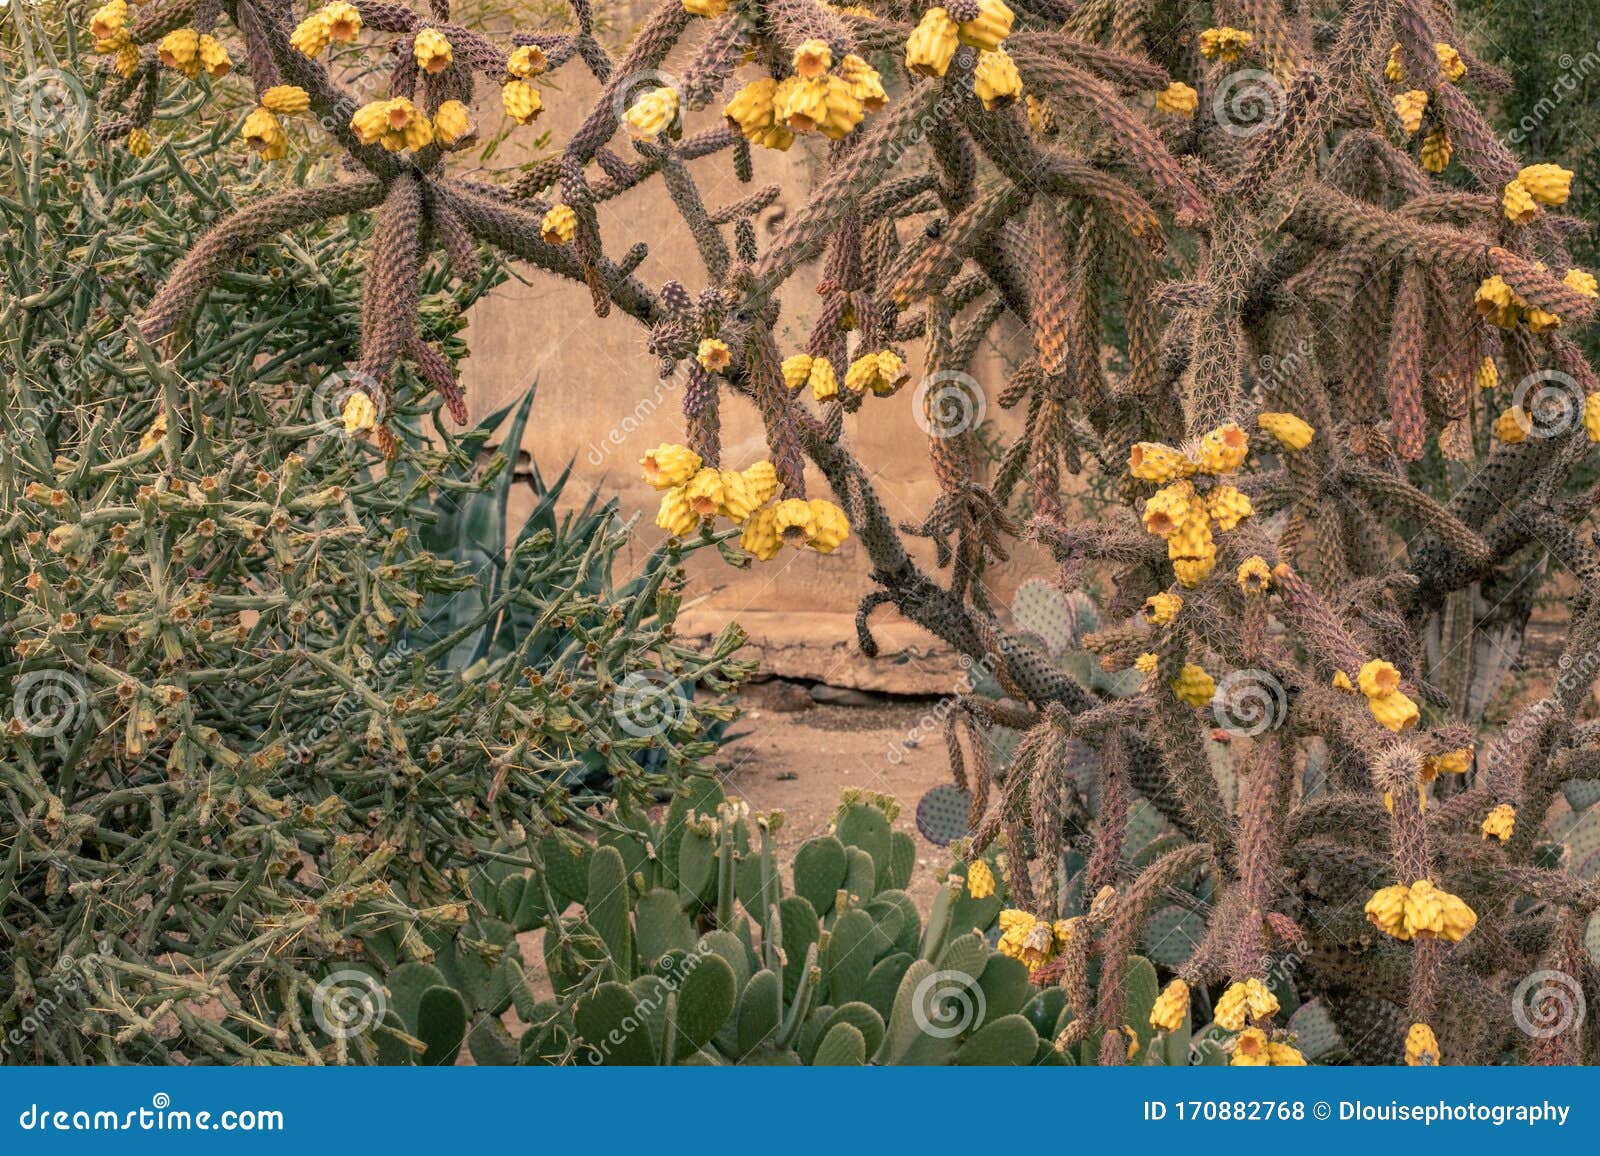 Cactus Garden In Arizona Desert Landscape Stock Photo - Image Of Southwest Plant 170882768